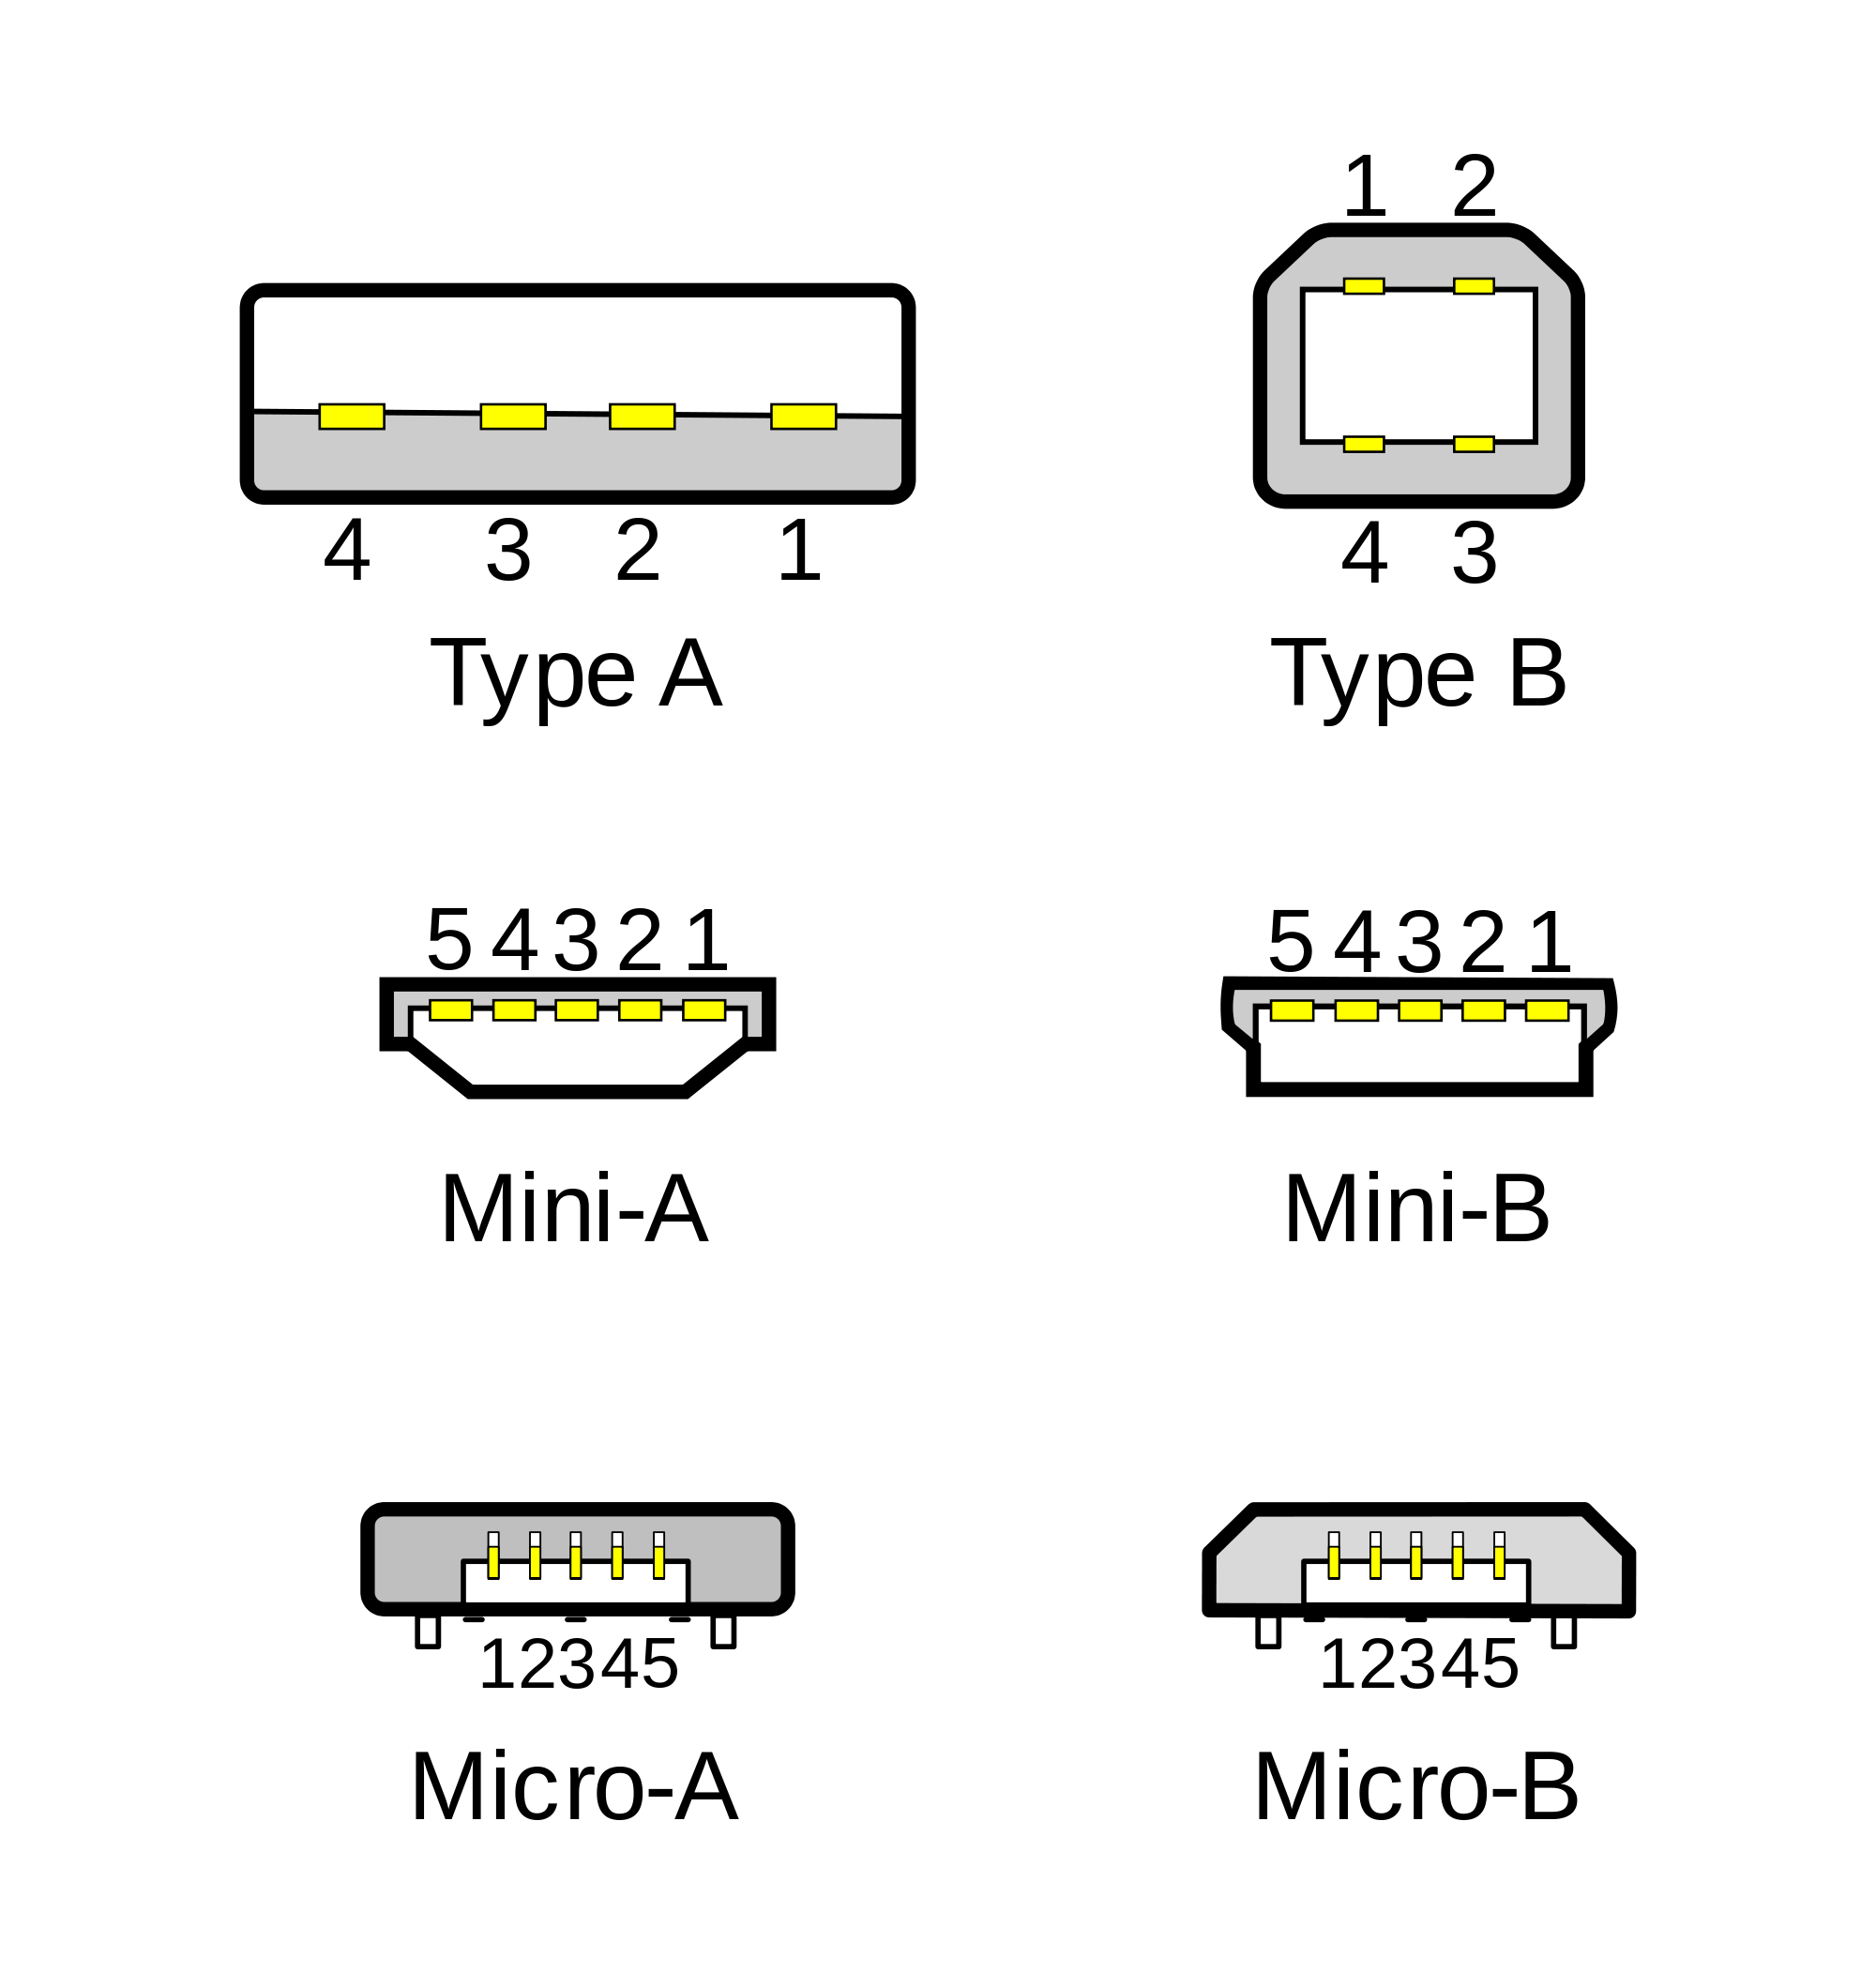 USB connectoren (bron: wikipedia)